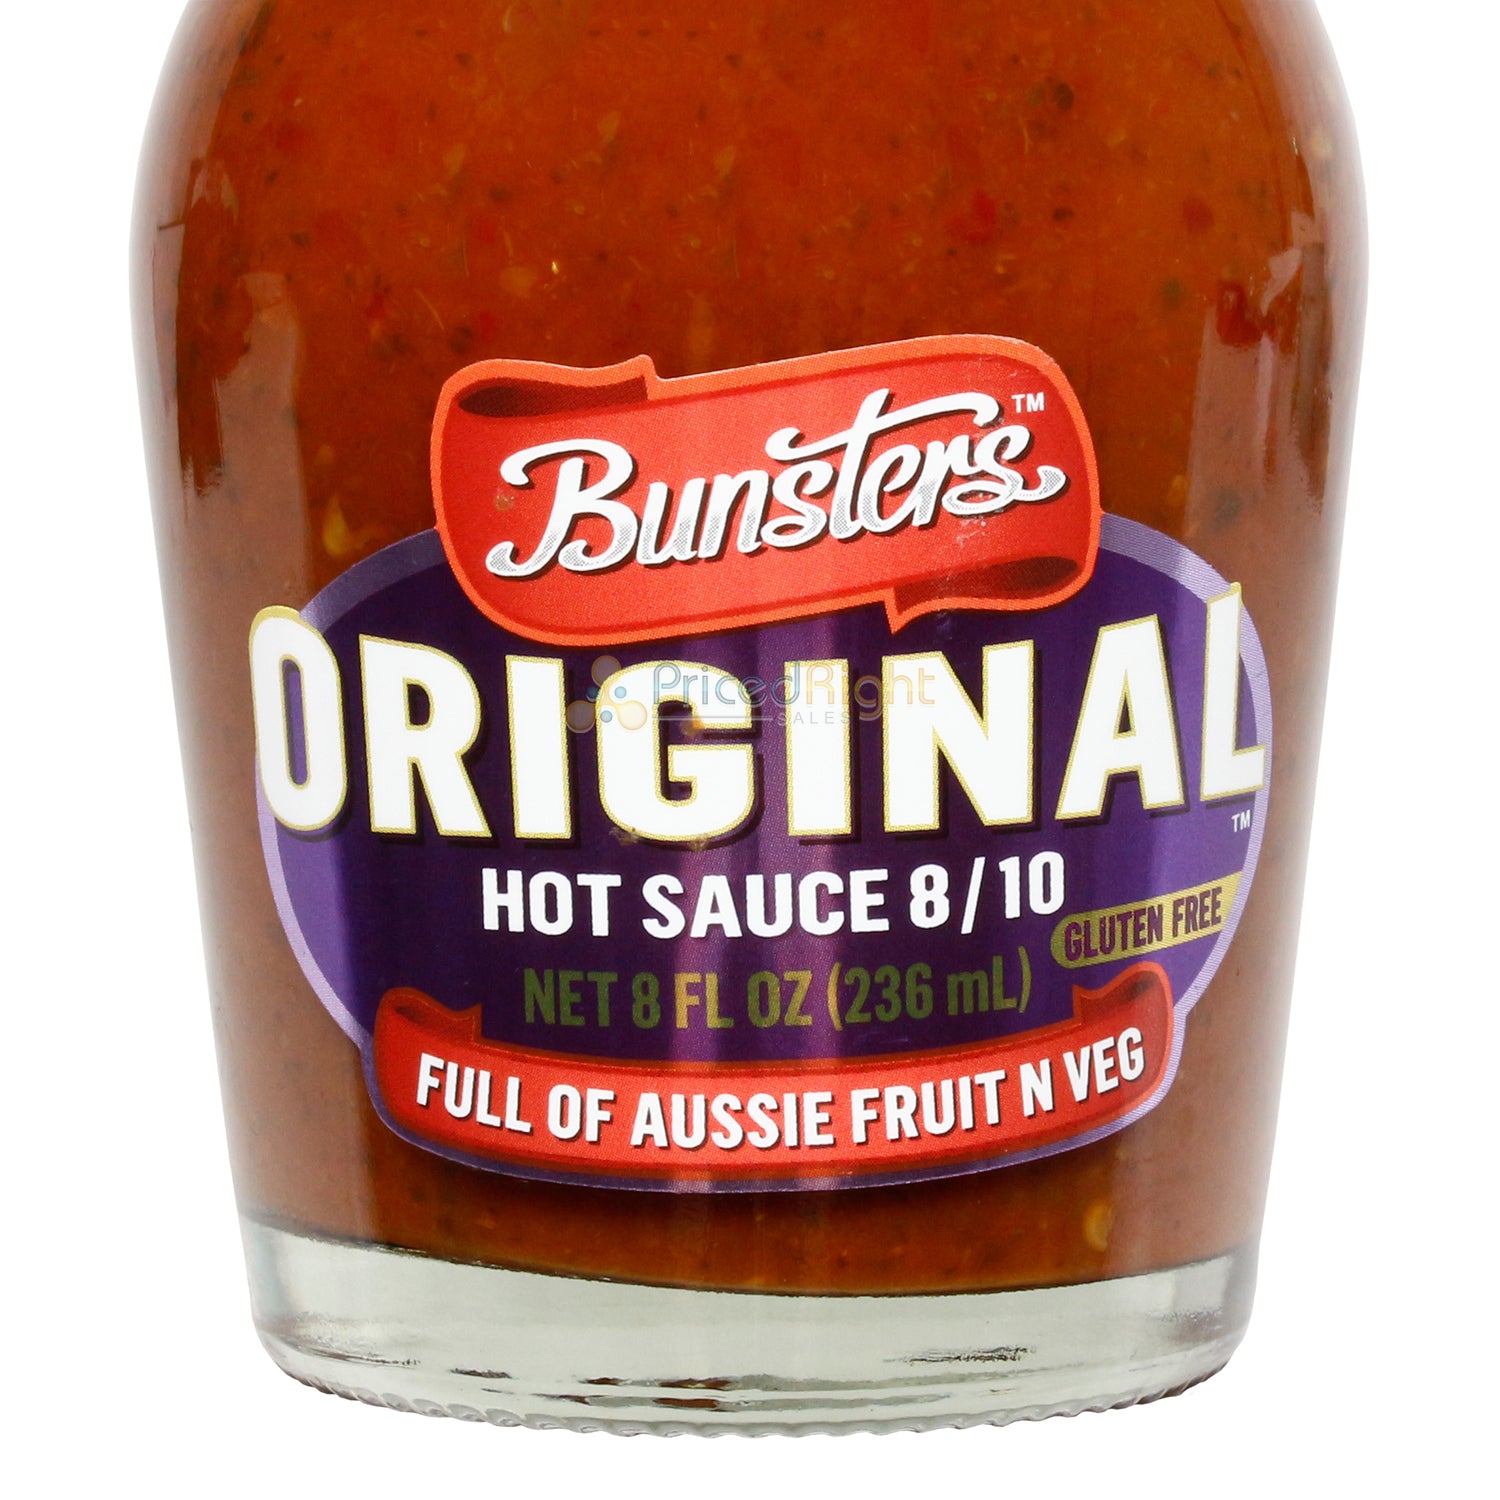 Bunsters Original Hot Sauce Full of Aussie Fruit N Veg 8/10 Heat Gluten Free 8oz